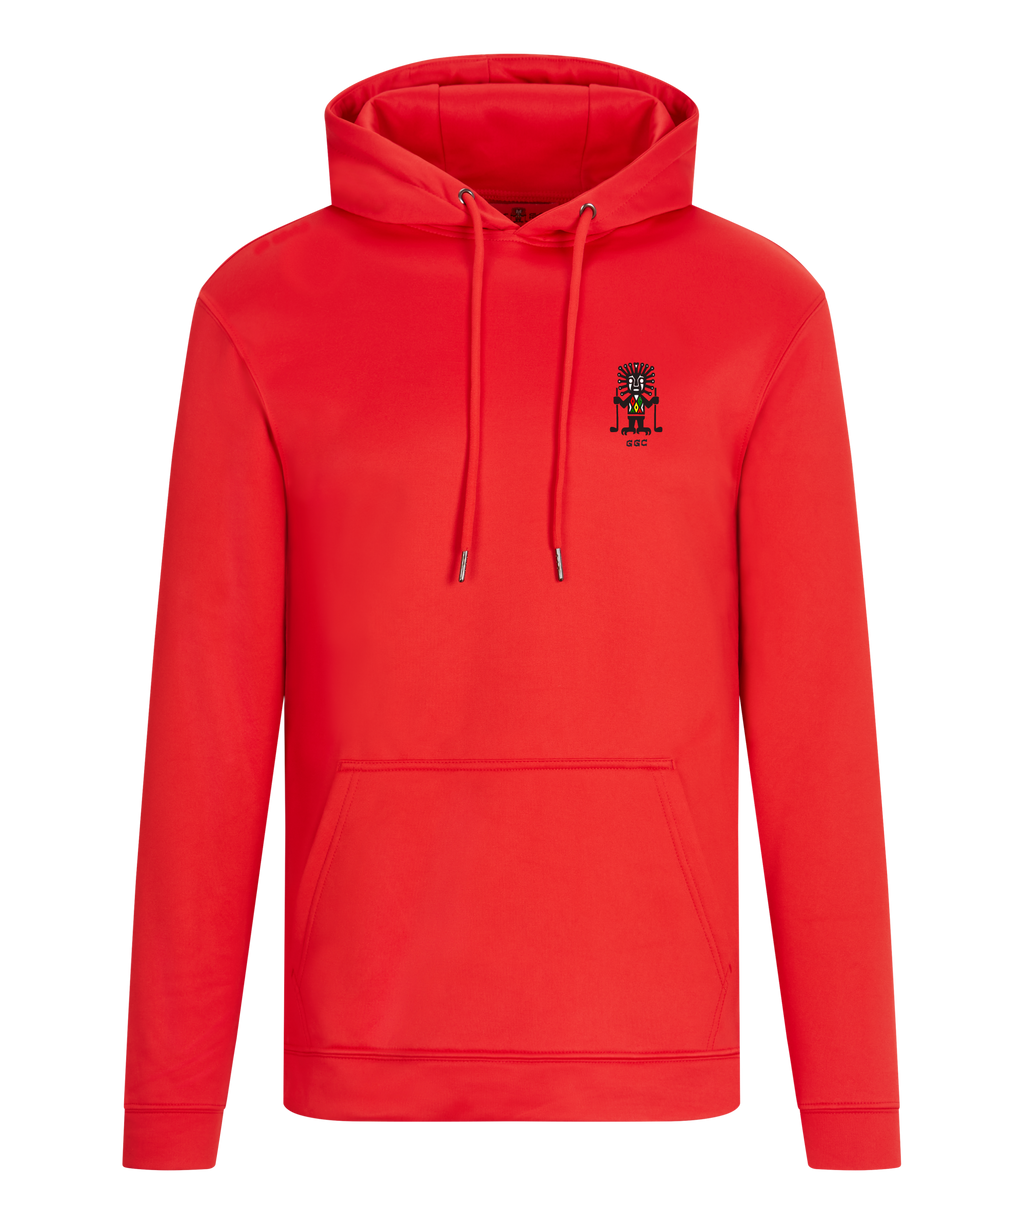 Golf God Clothing XL Logo Red Hoodie 